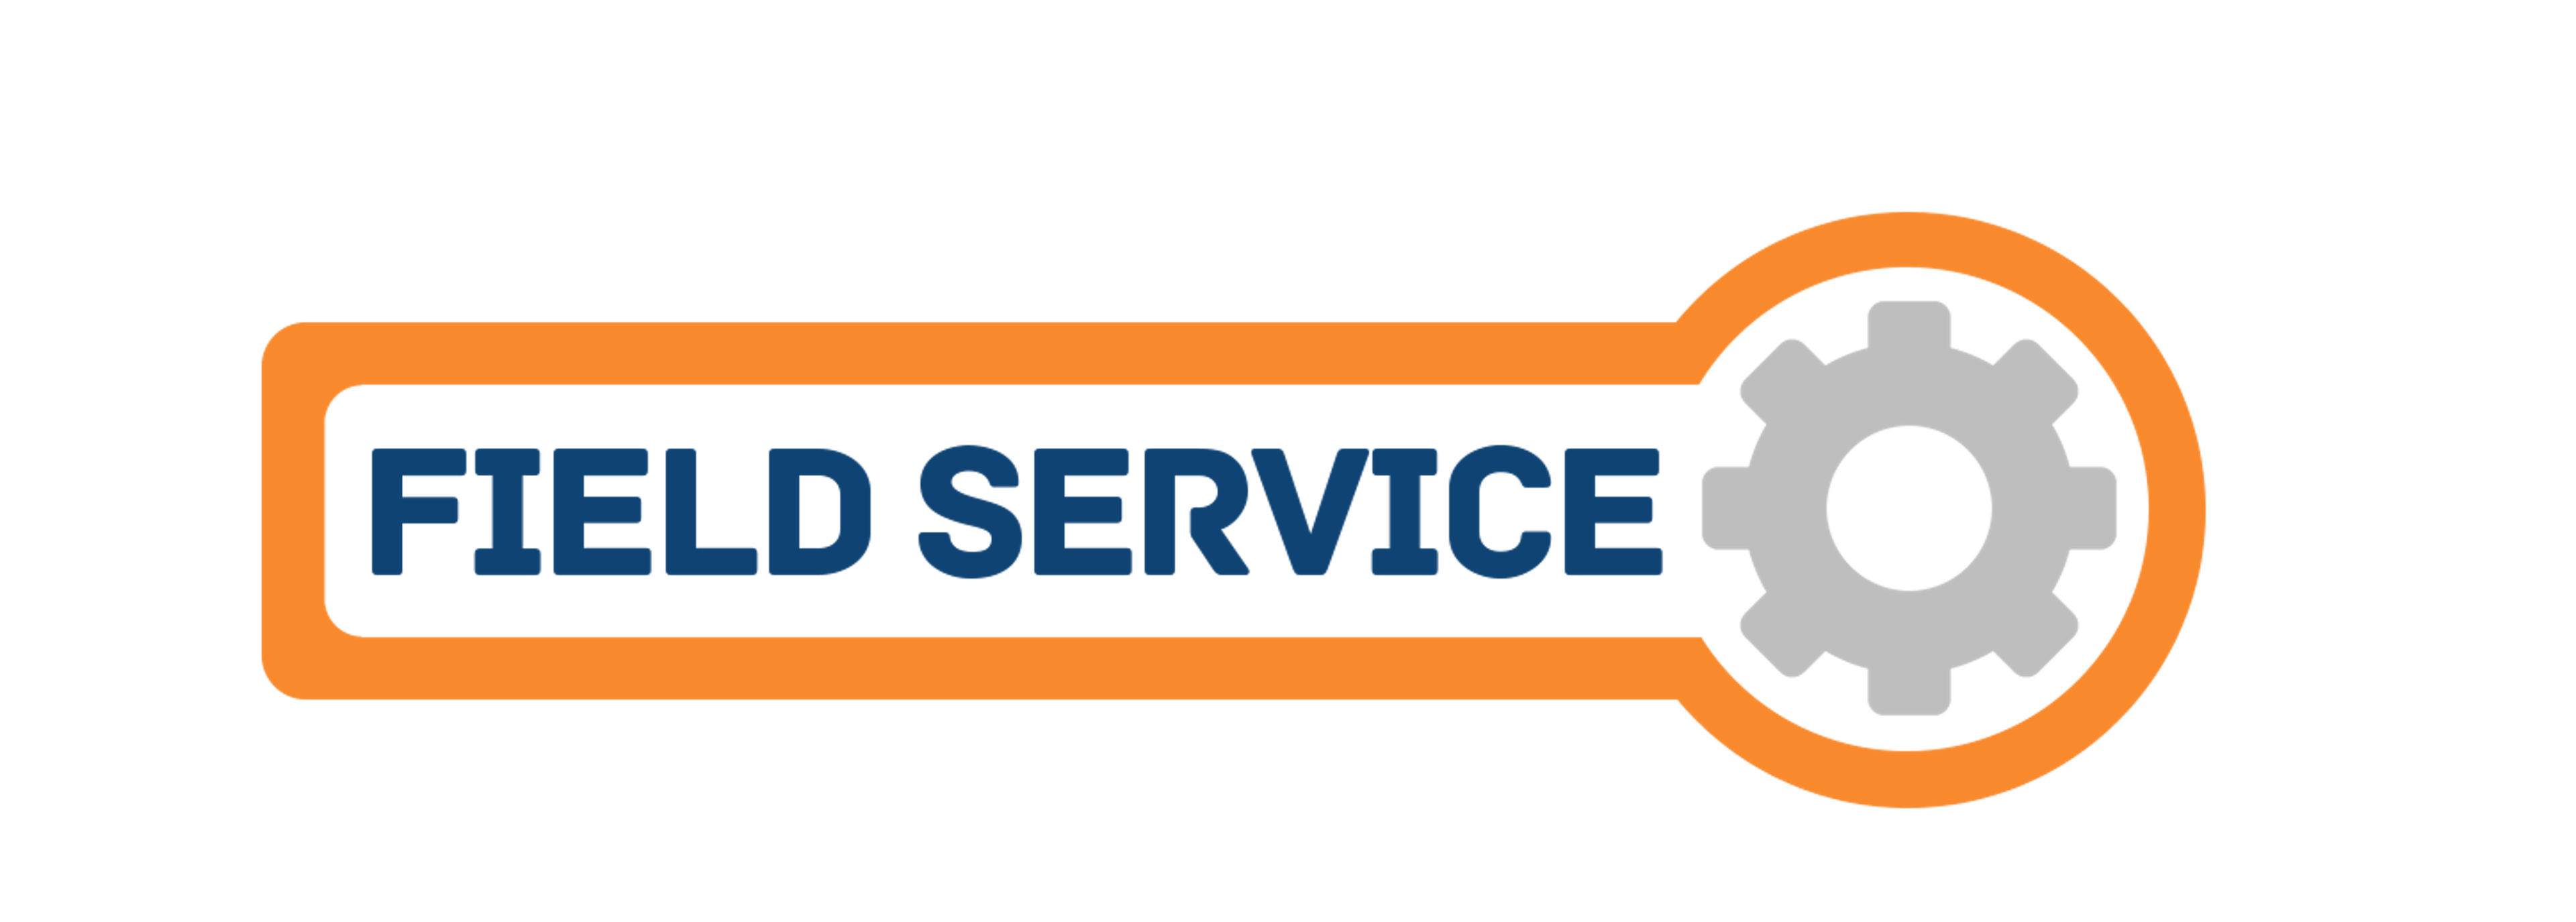 BiznusSoft Field Service Logo